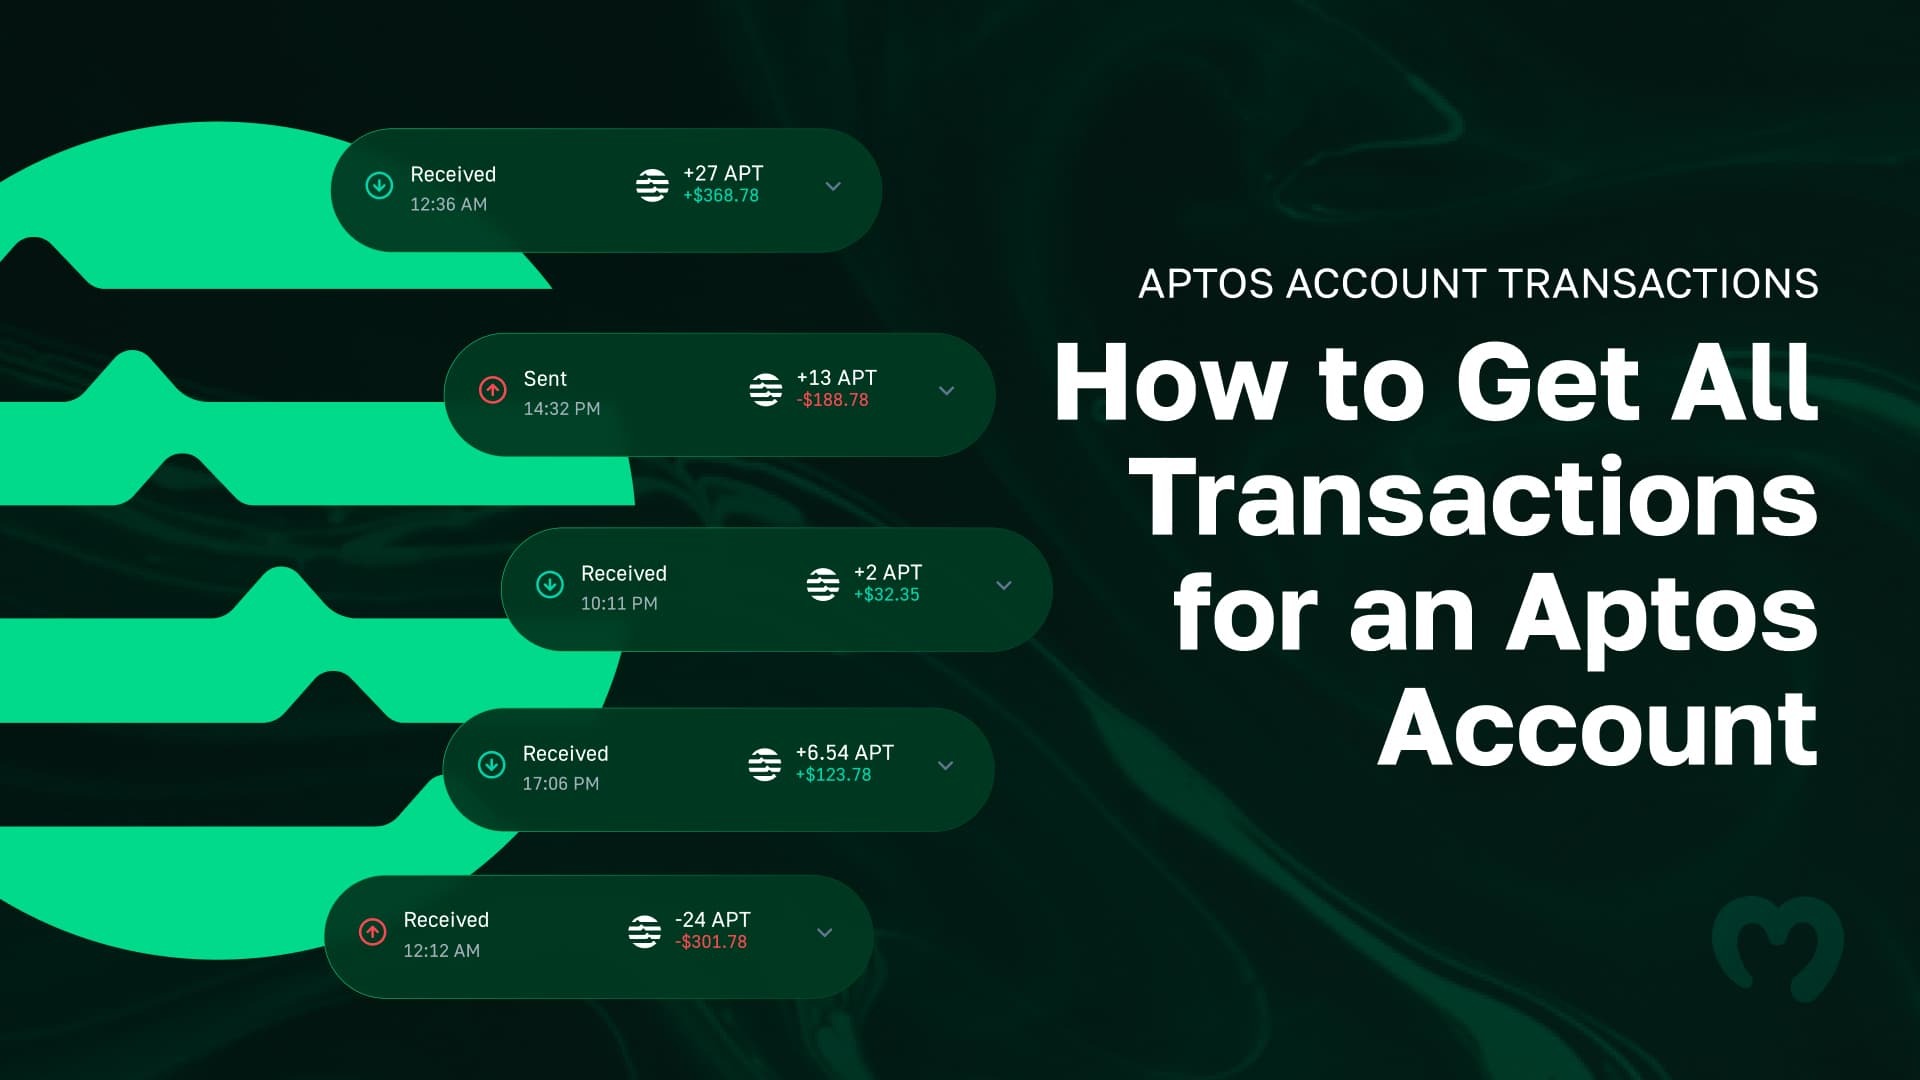 Aptos Account Transactions - How to Get All Transactions for an Aptos Account